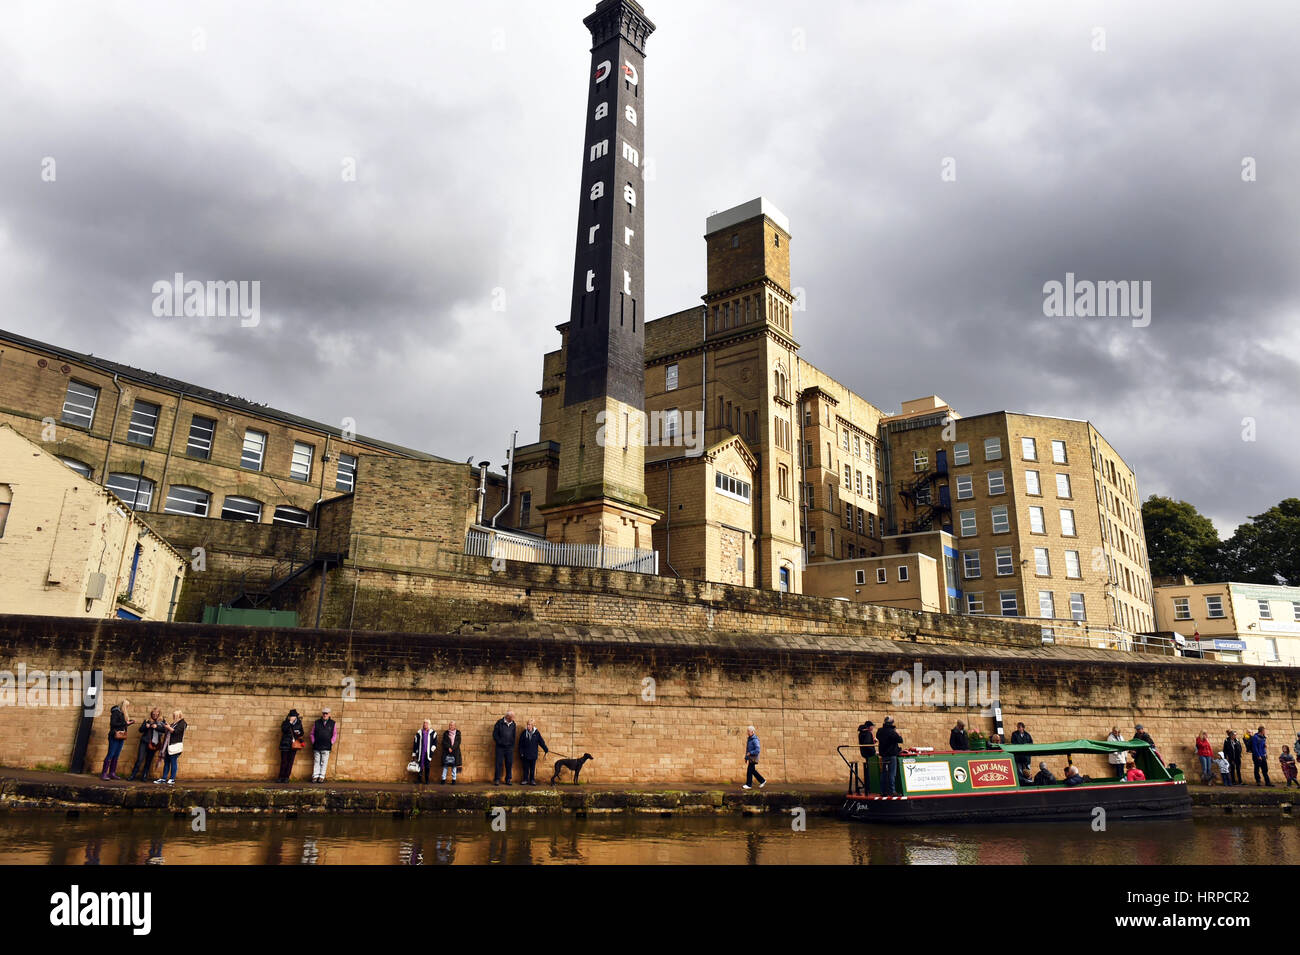 Bingley Damart Fabrik in der Nähe der Leeds-Liverpool-Kanal. Stockfoto